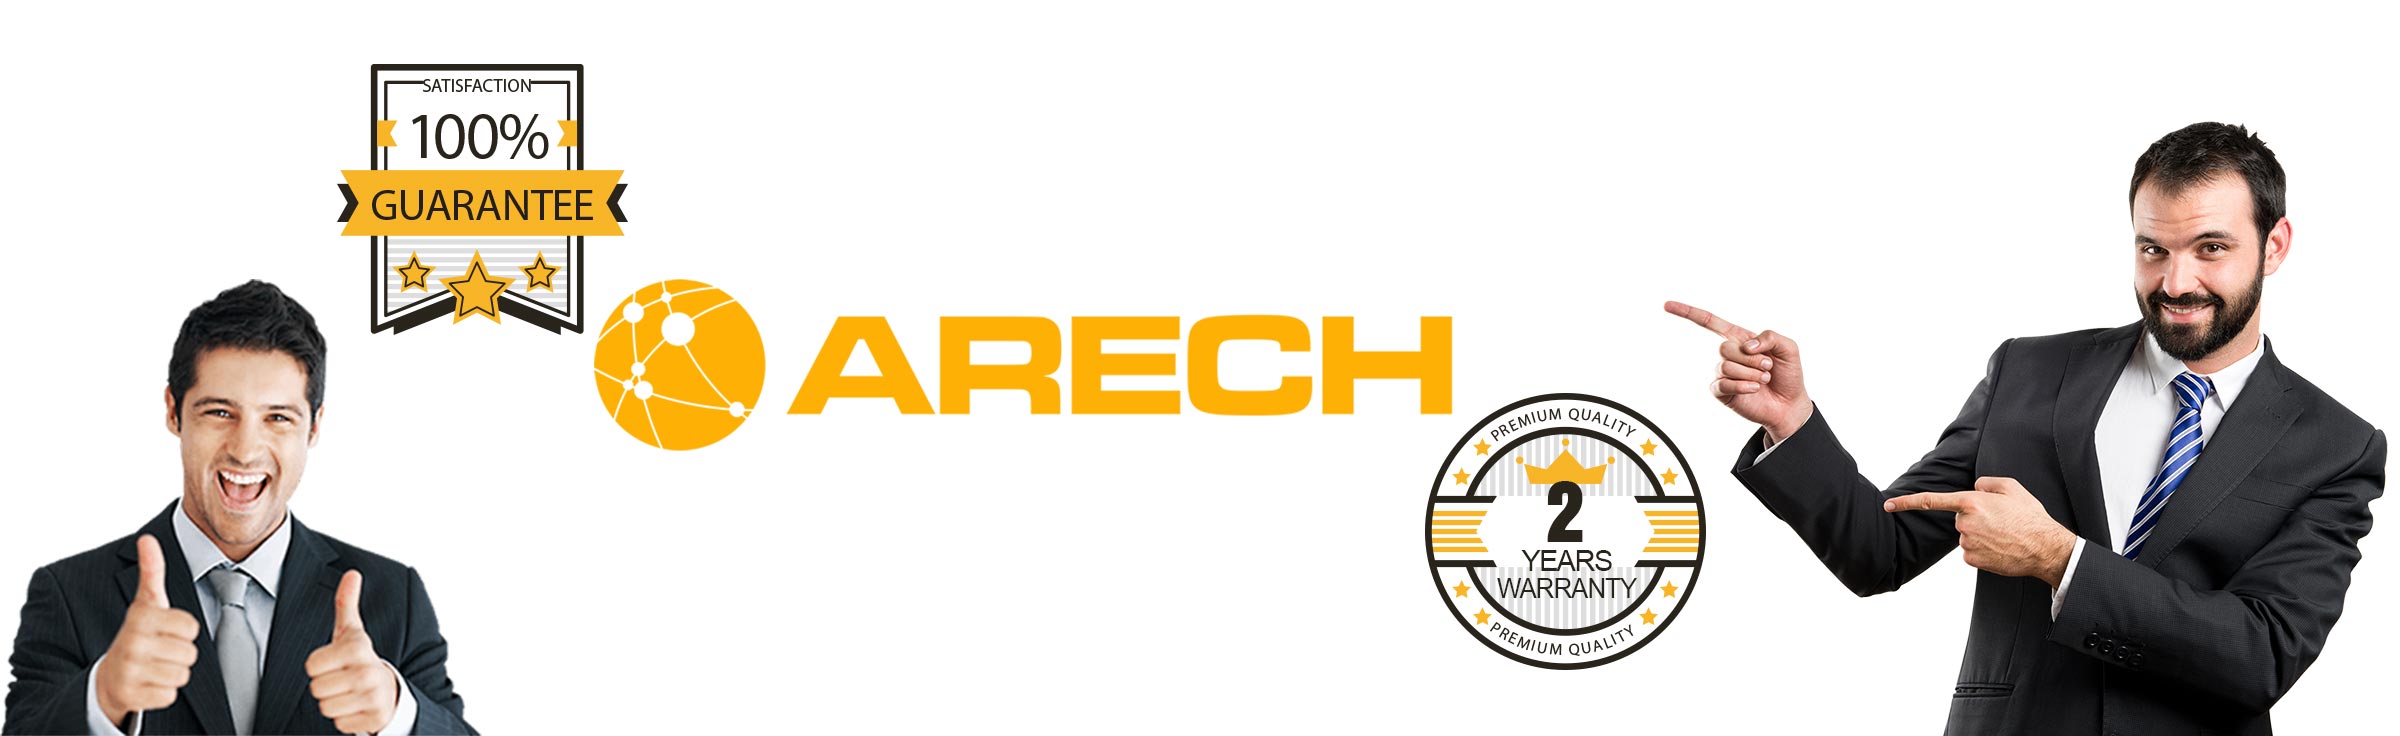 ARECH Warranty & Guarantee Policy